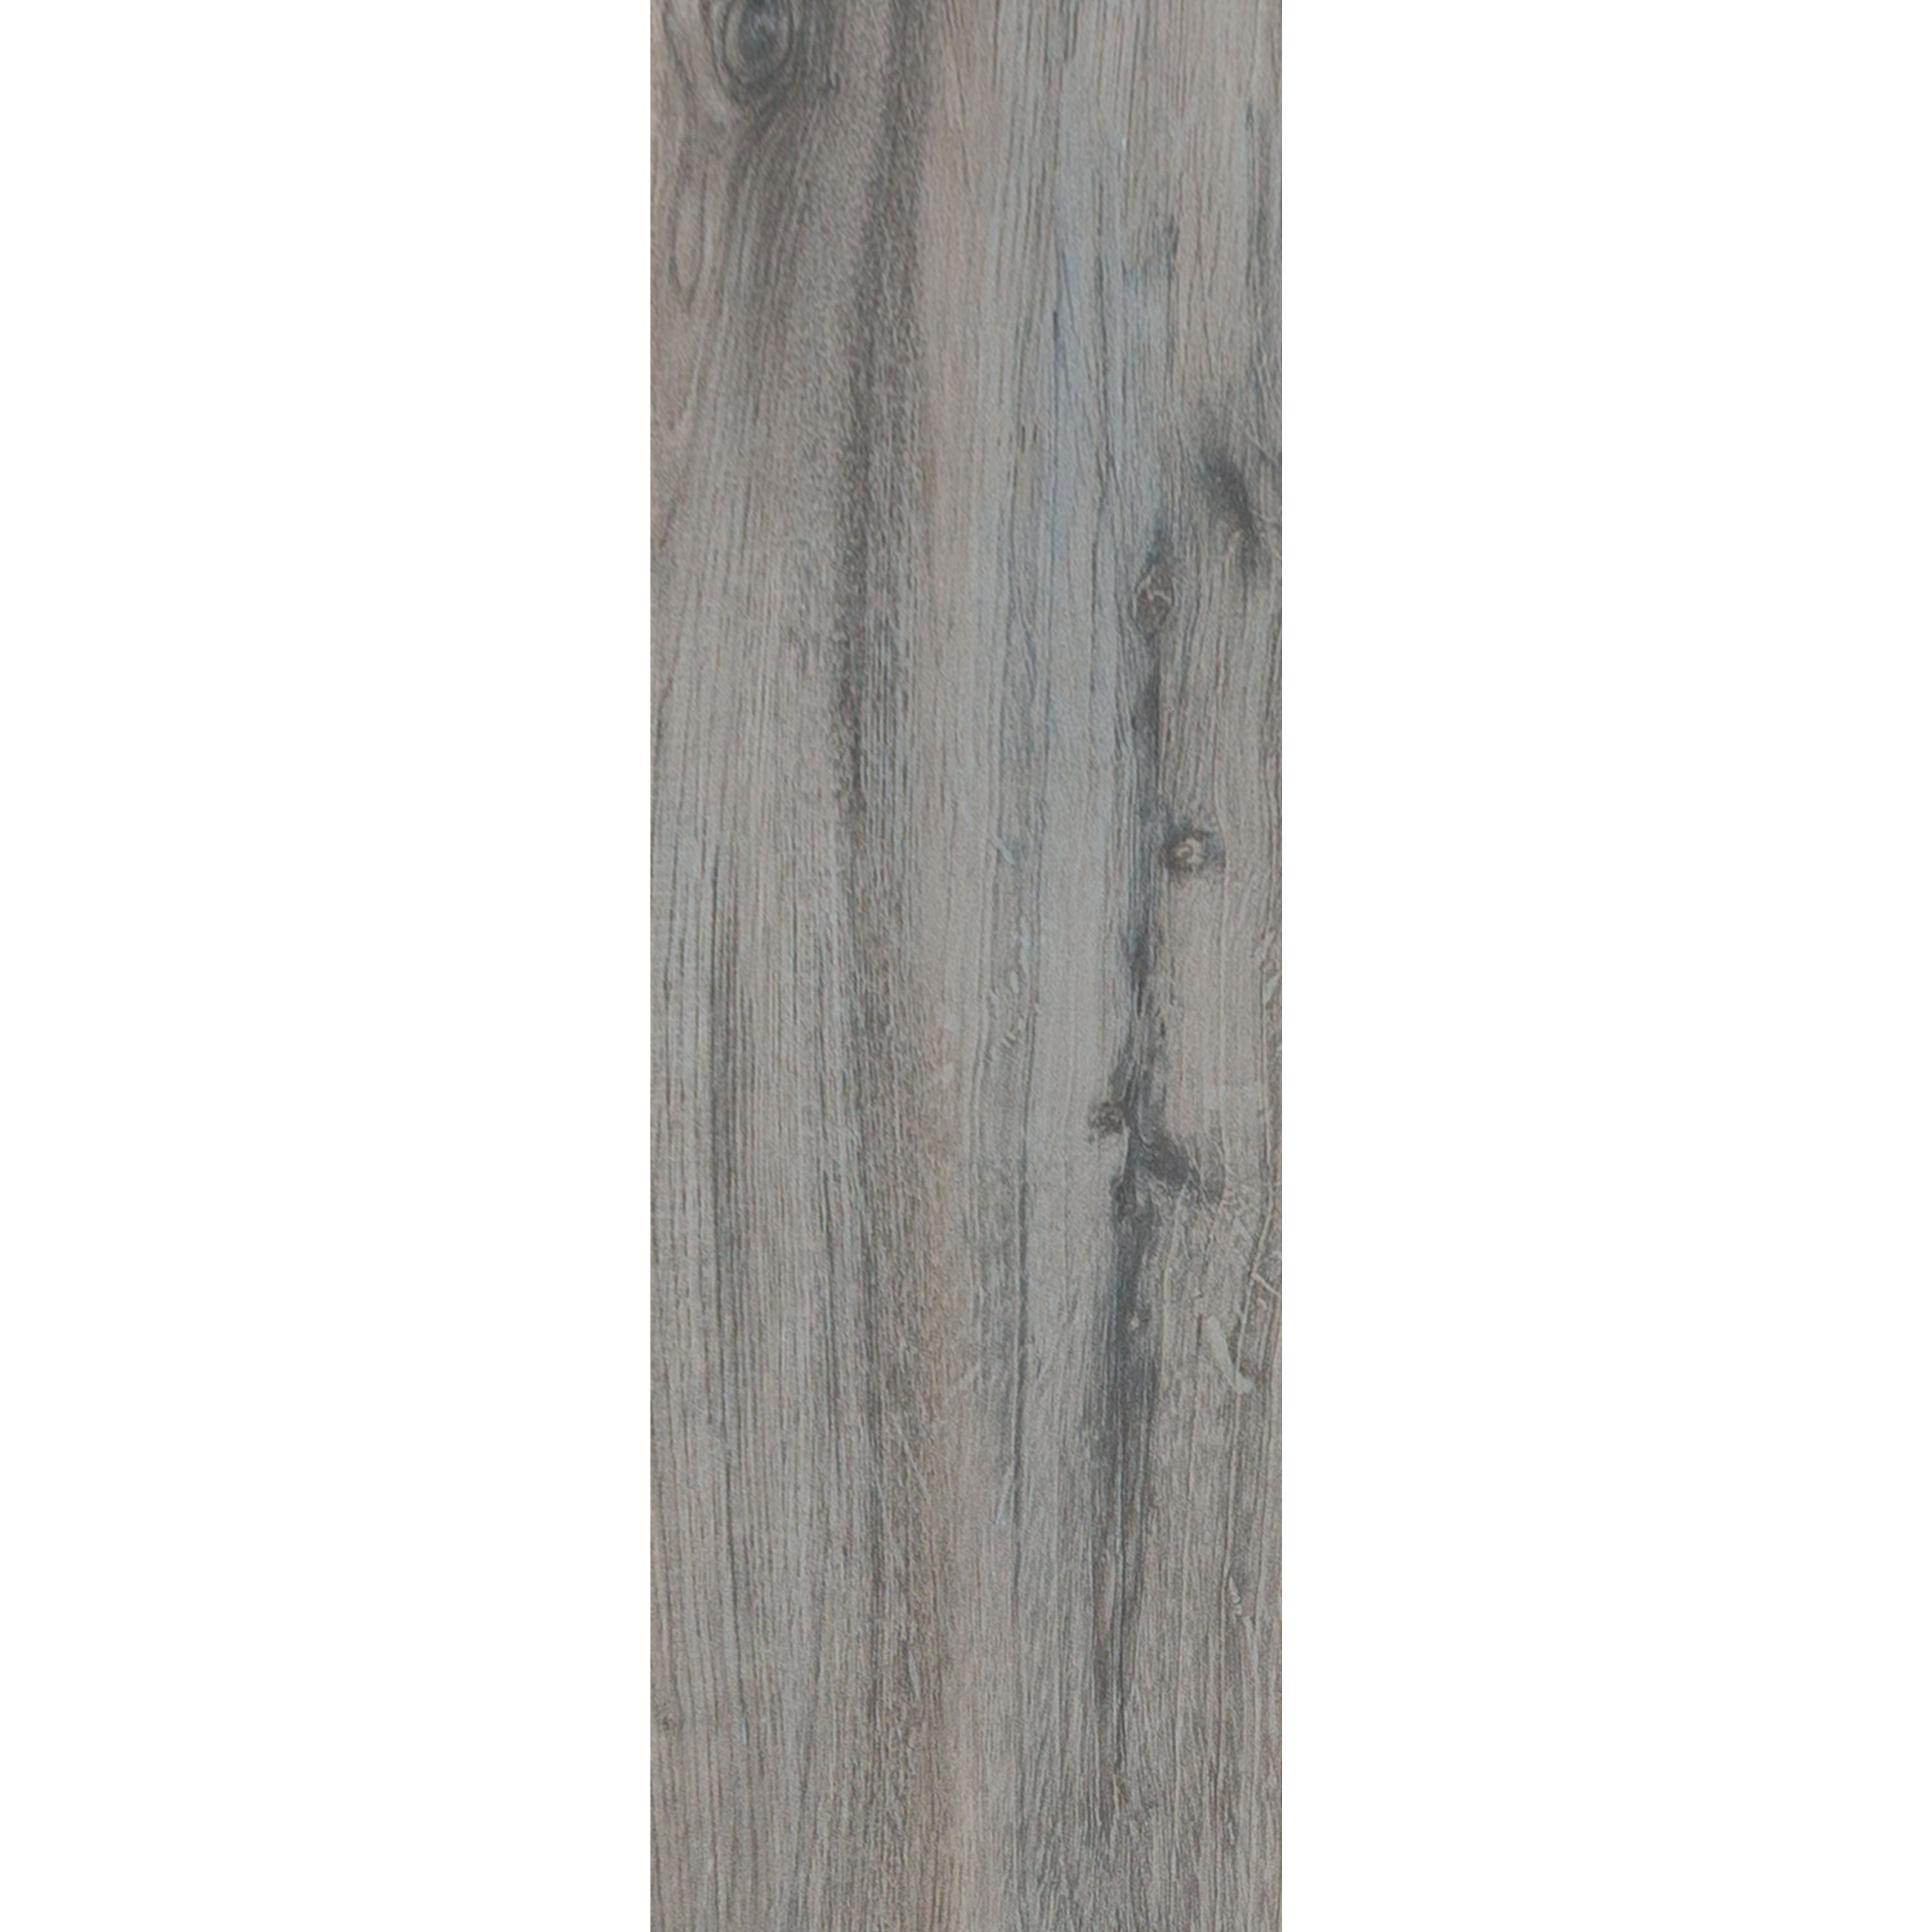 Bodenfliesen Holzoptik Fullwood Grau 20x120cm